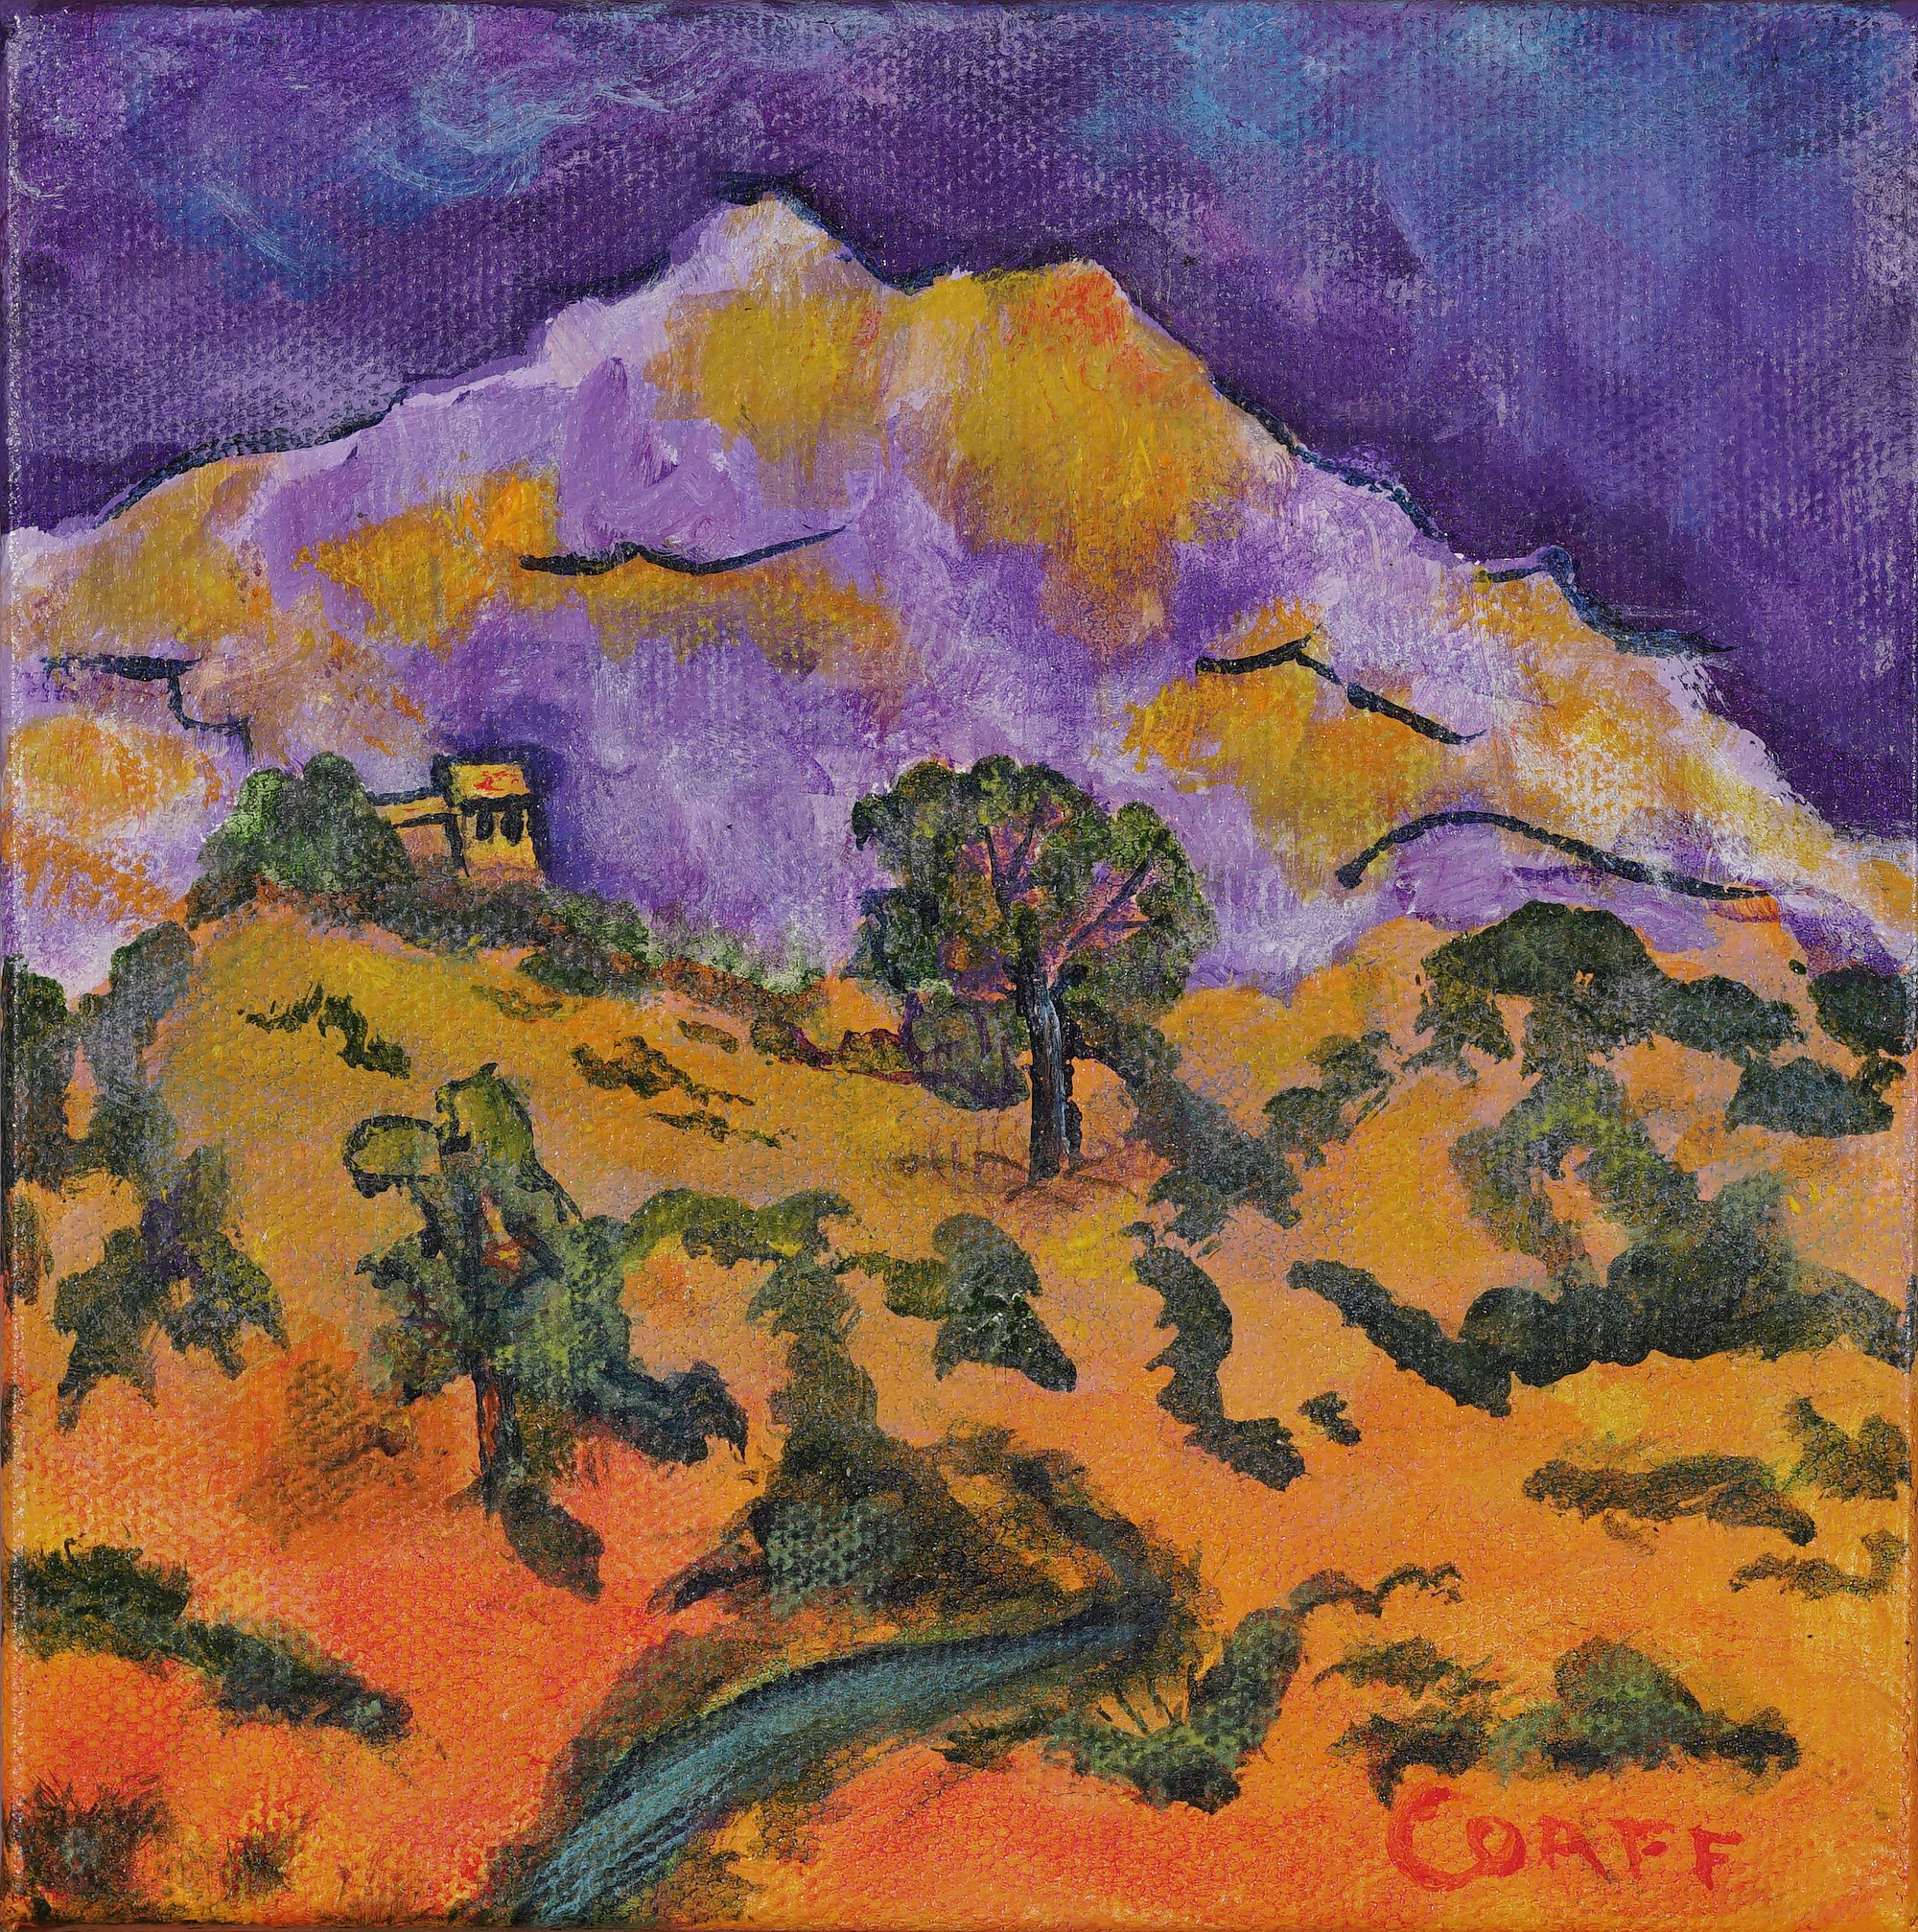 Marti Corff, Mont Sainte Victoire, Paul Cezanne-like